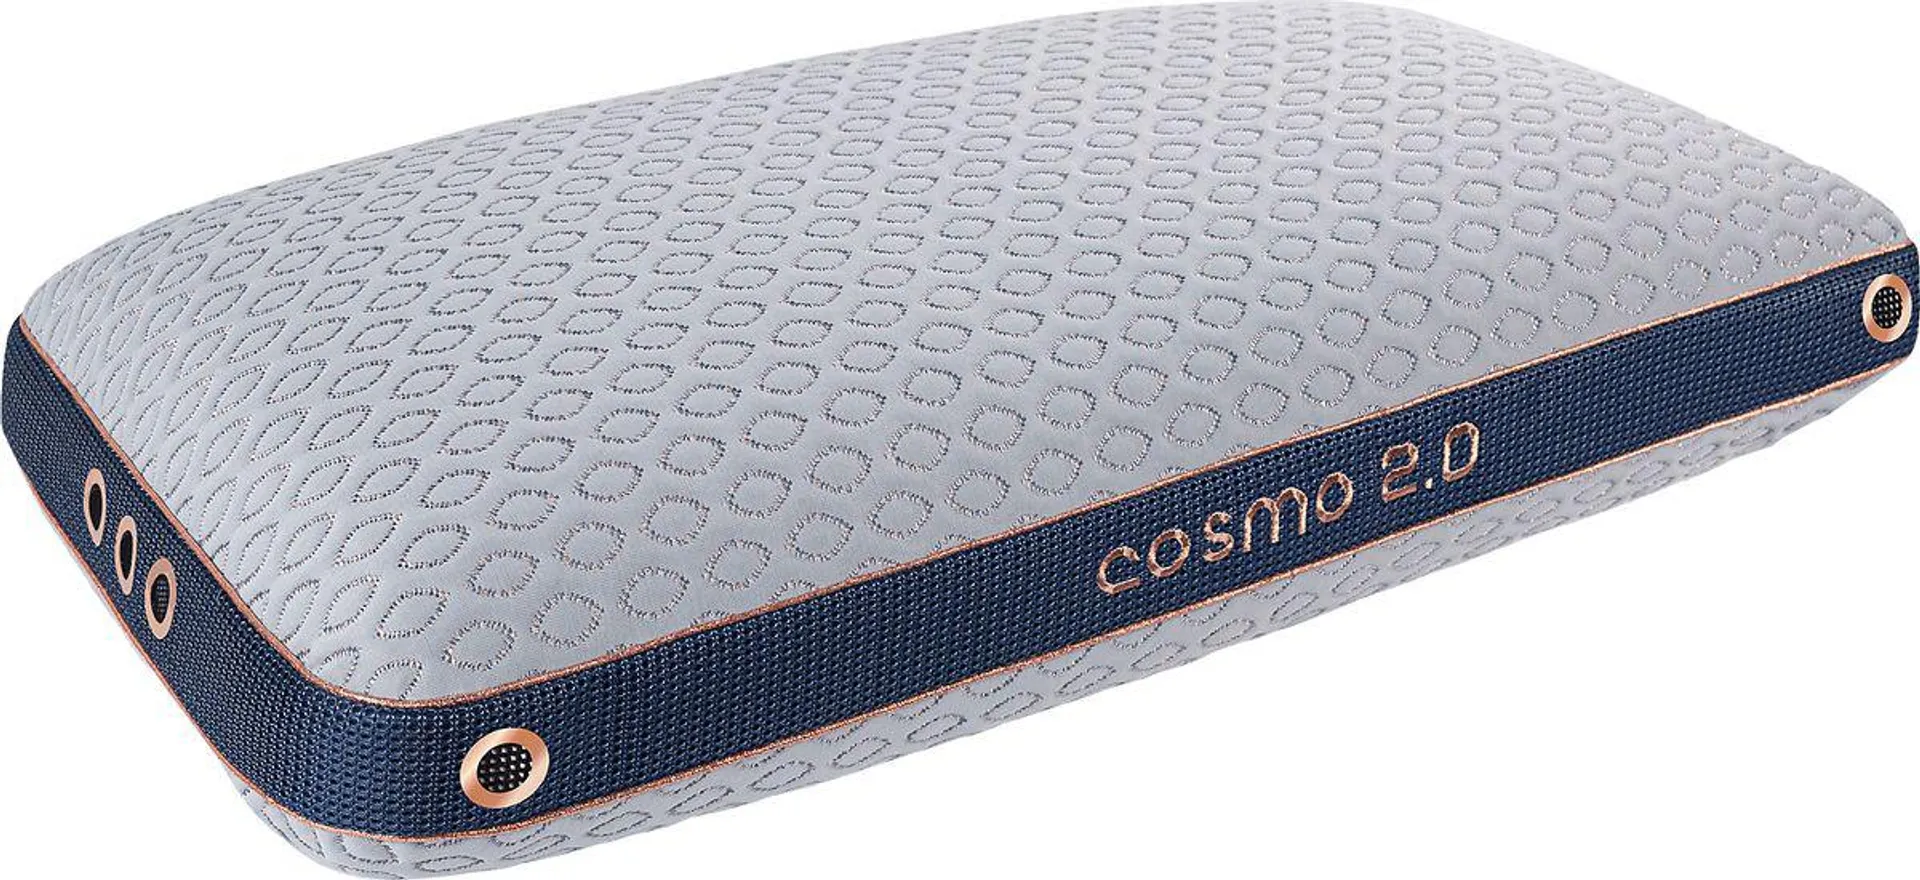 Bedgear Cosmo Pillow